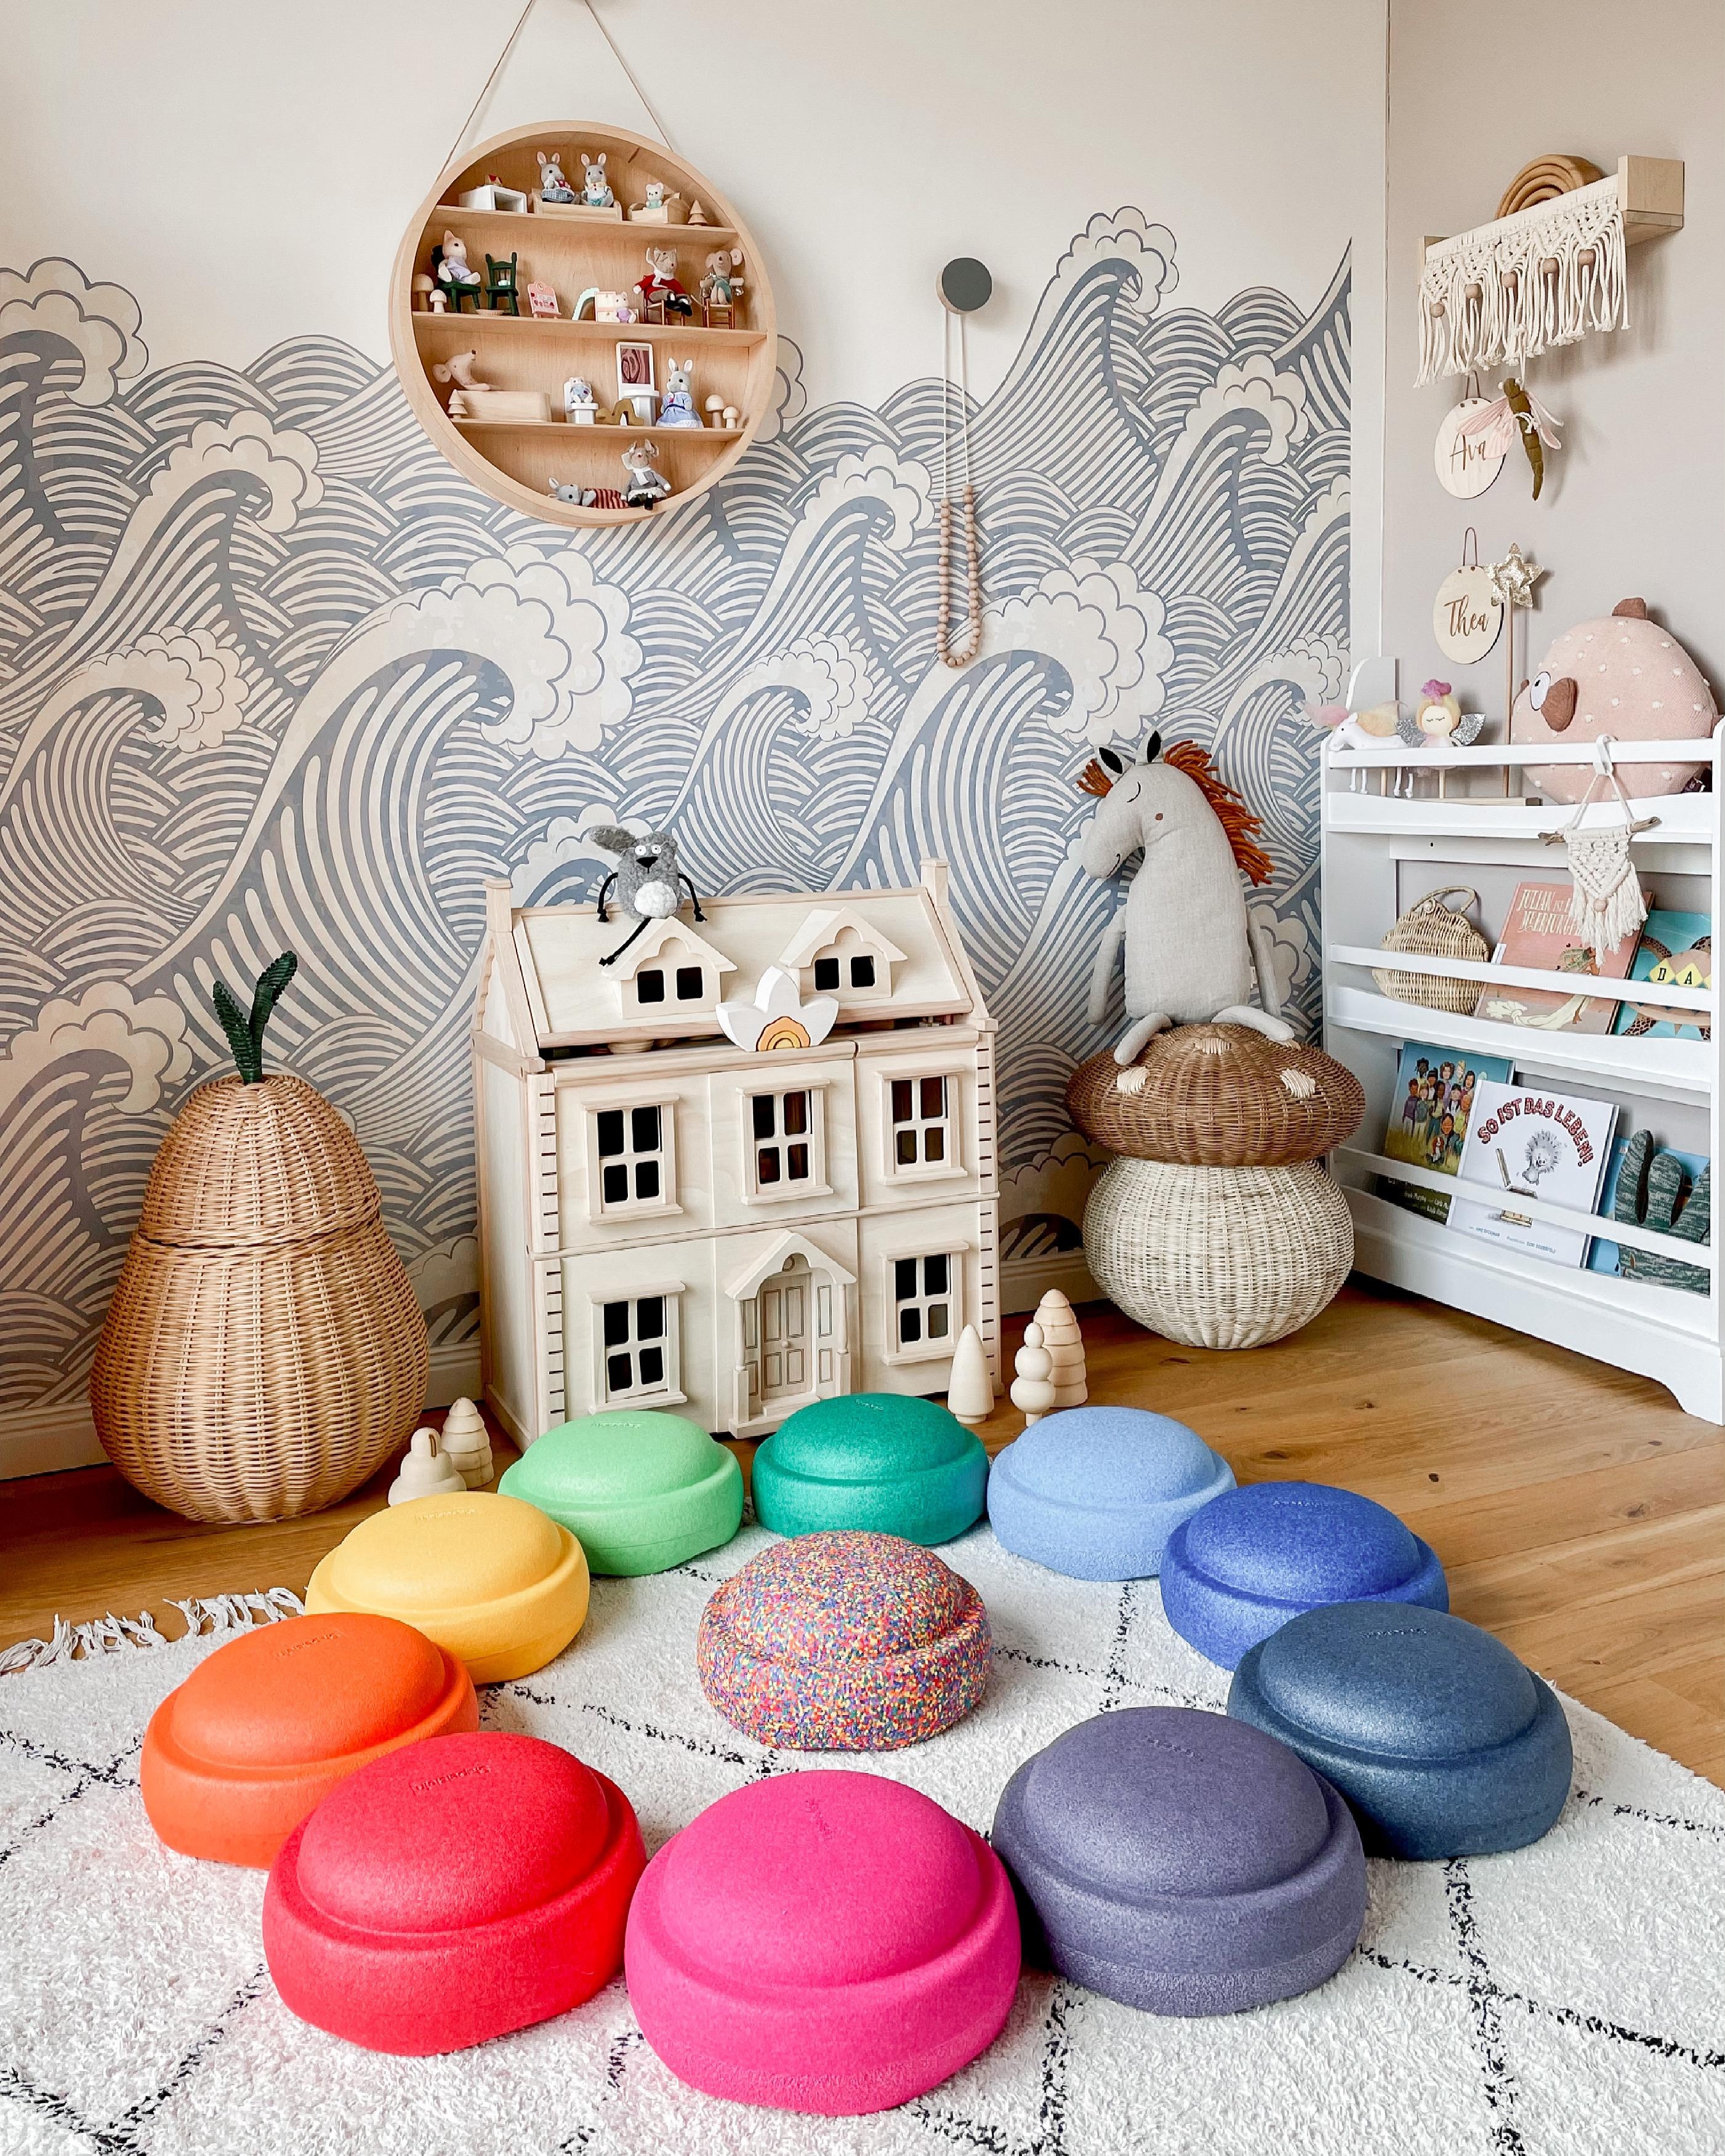 Love colour ...
#regenbogen #kunterbunt #bunteszuhause #kinderzimmer #kidsroom